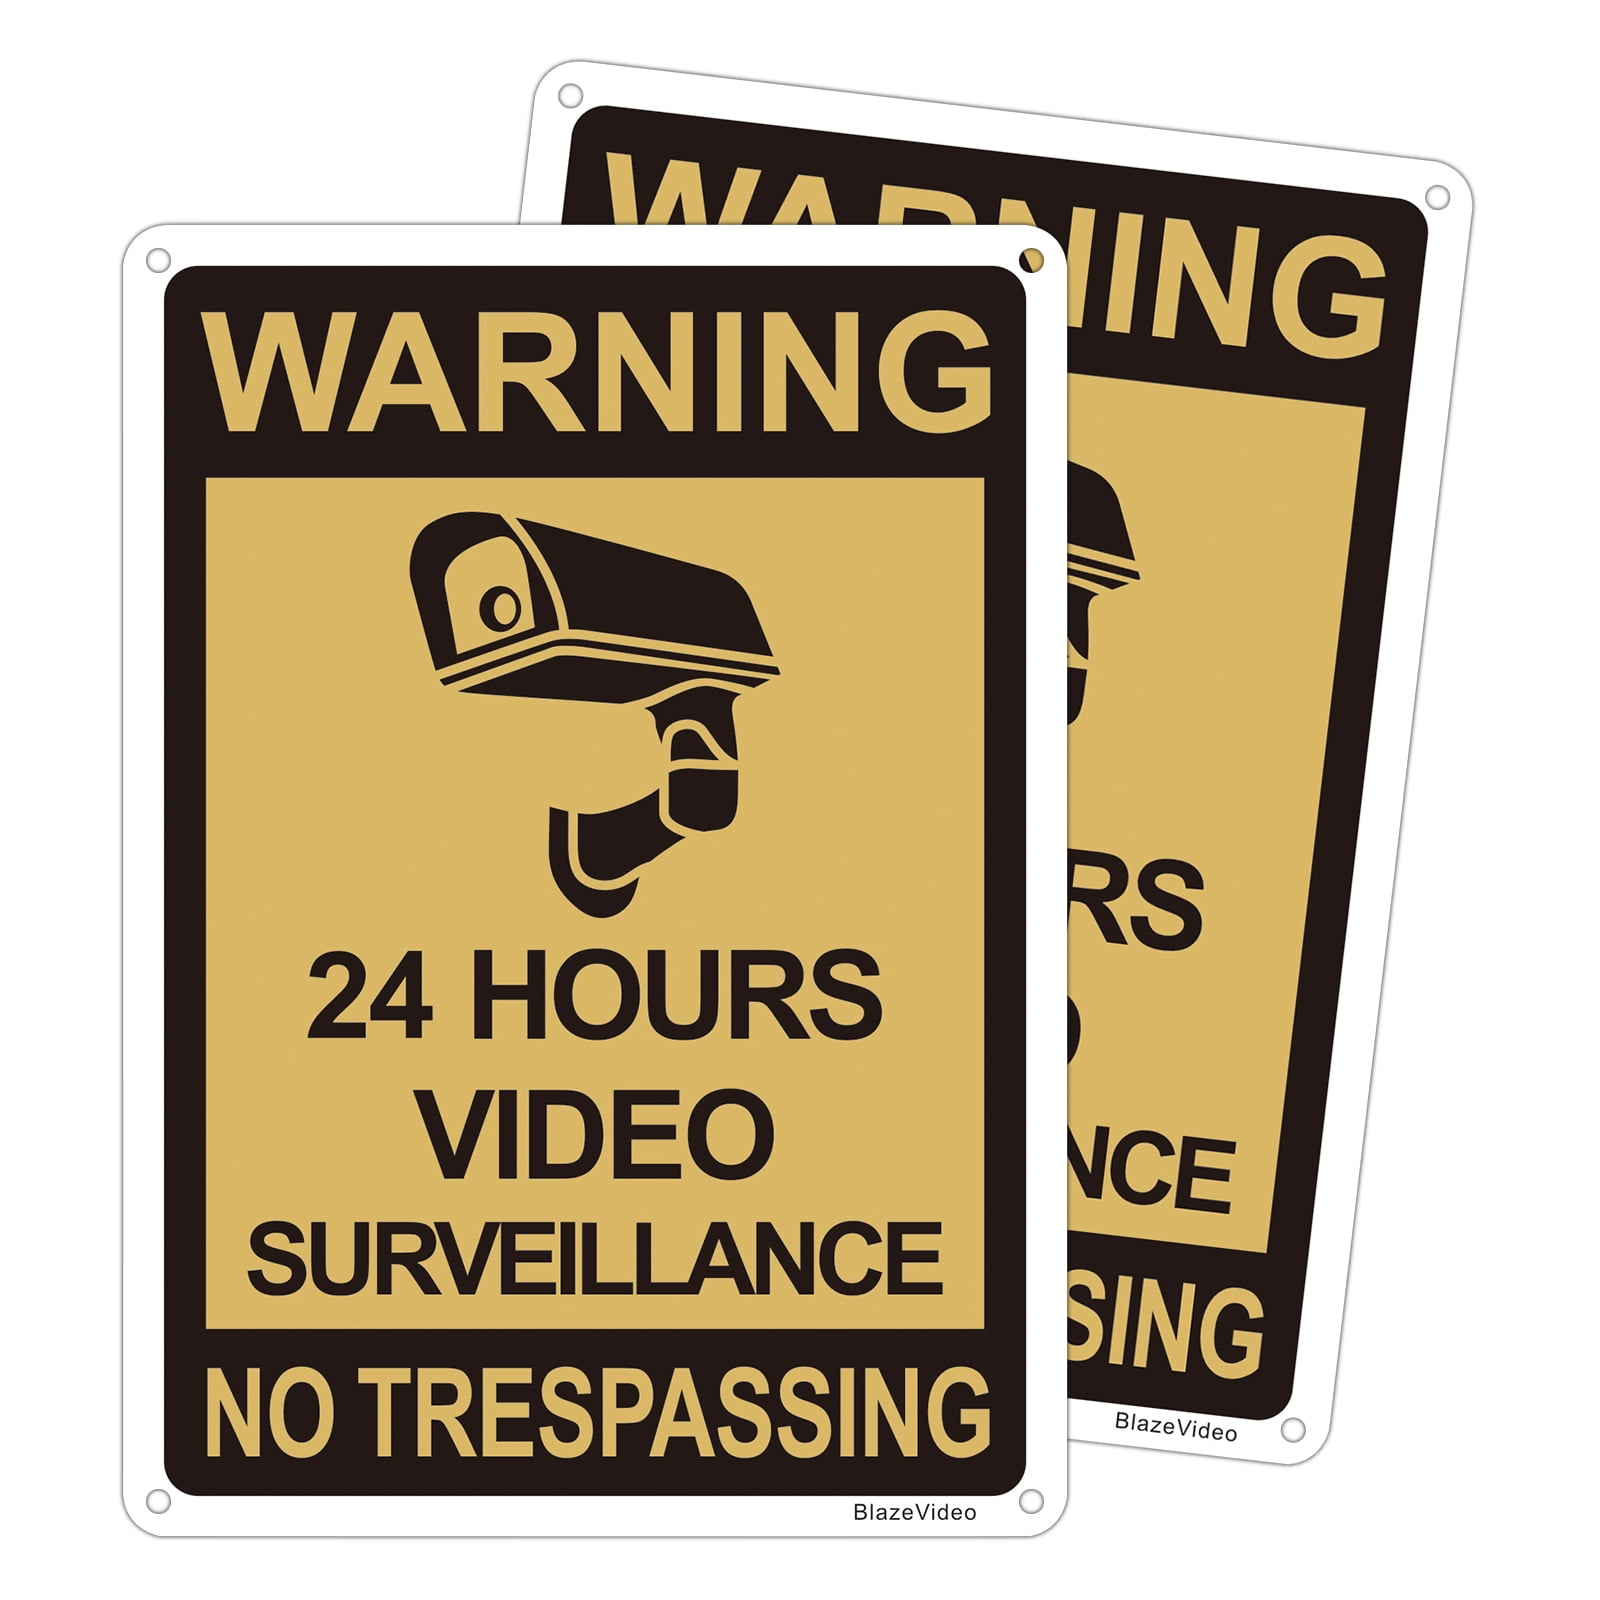 30 x 20 cm A4 CCTV Camera Warning Signs x 2 Security Camera Warning Signs 